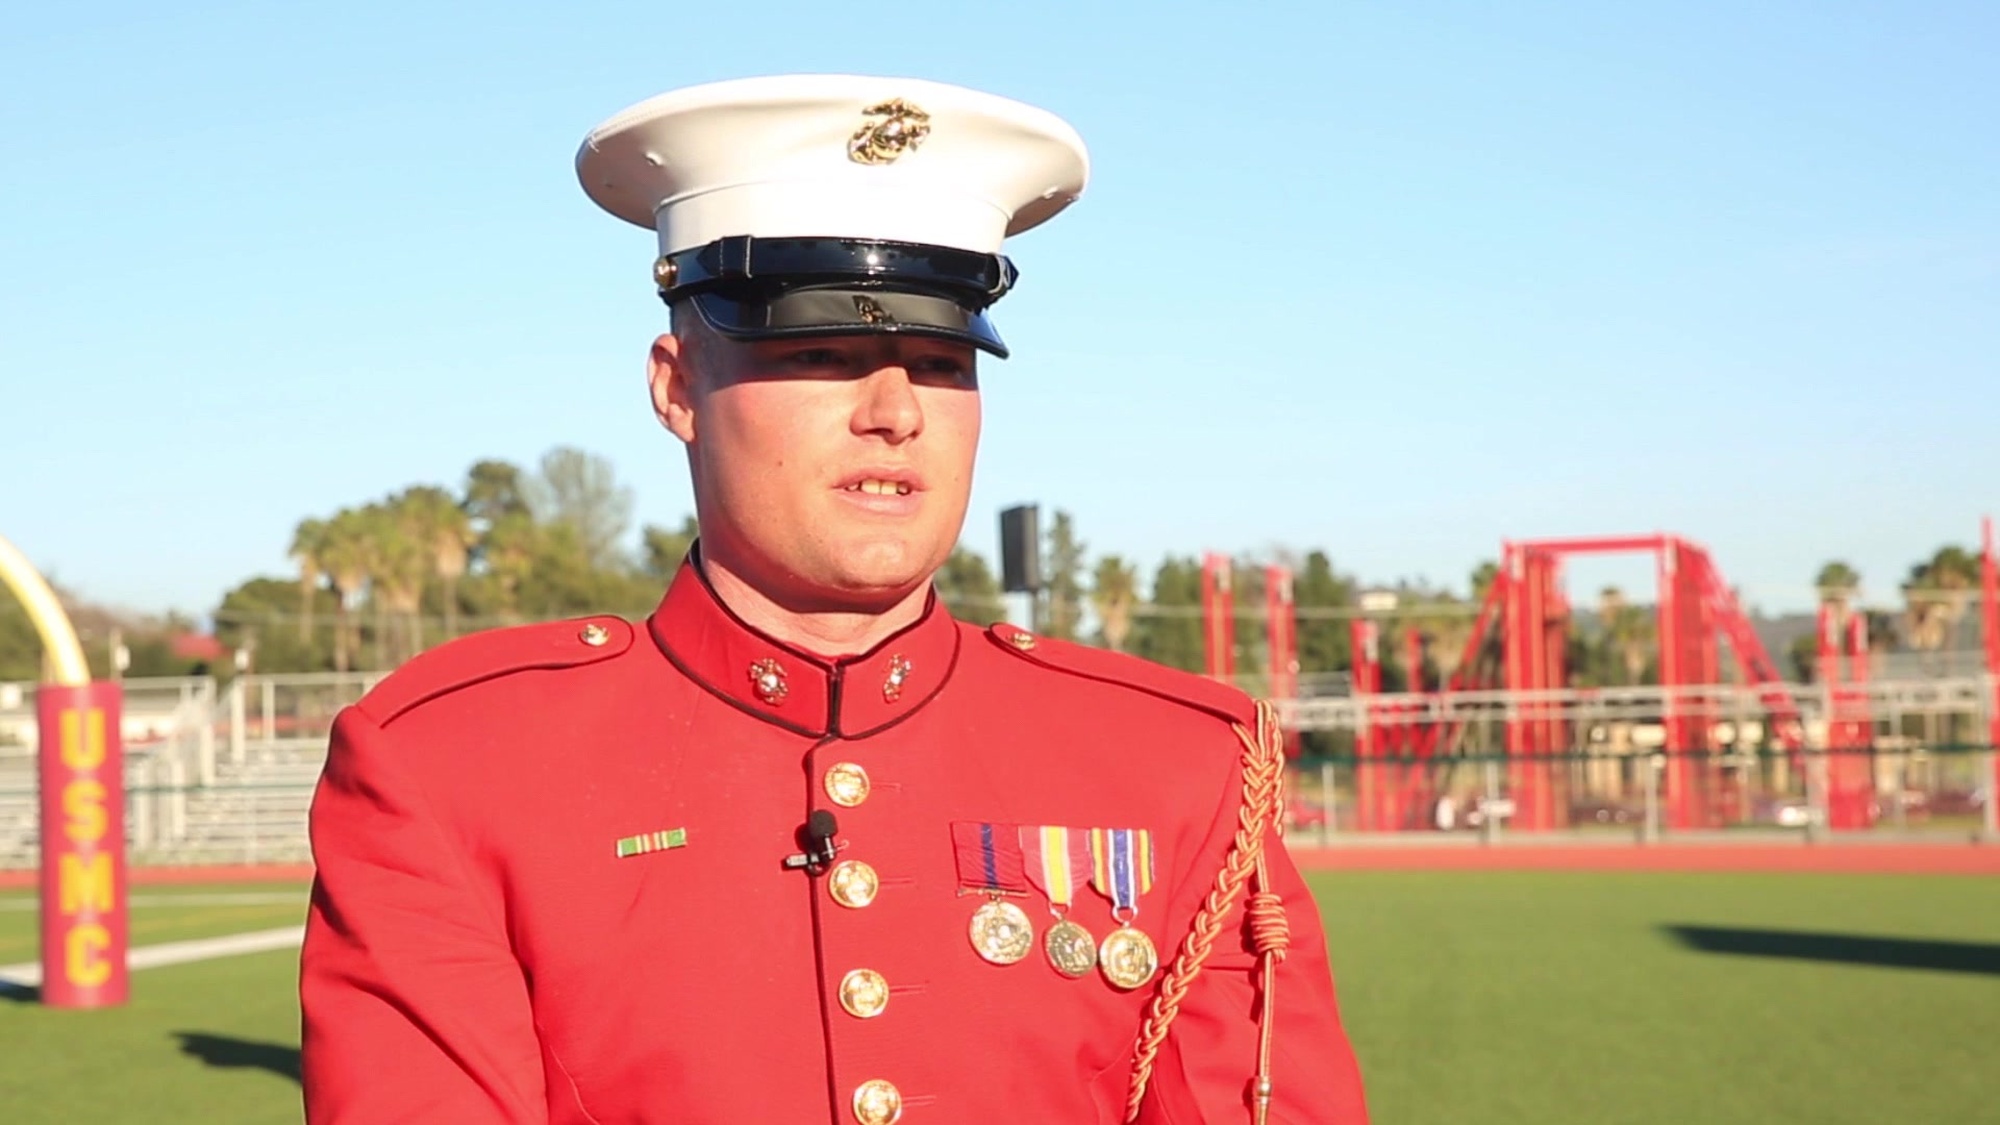 Naval Academy introduces Marine Corps dress blues football uniform